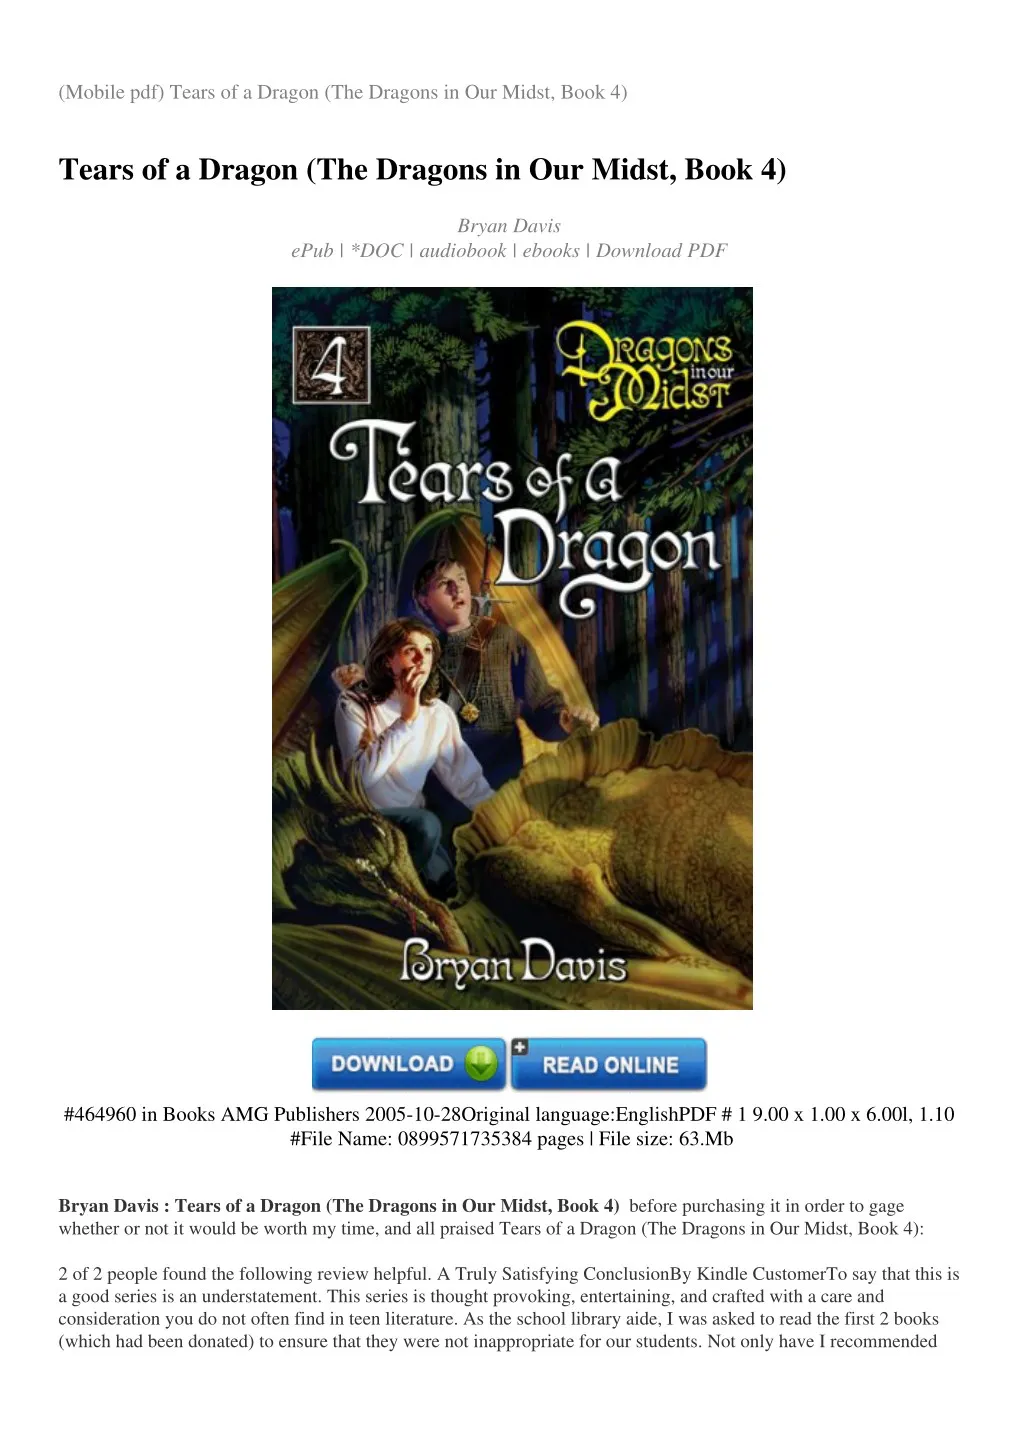 mobile pdf tears of a dragon the dragons